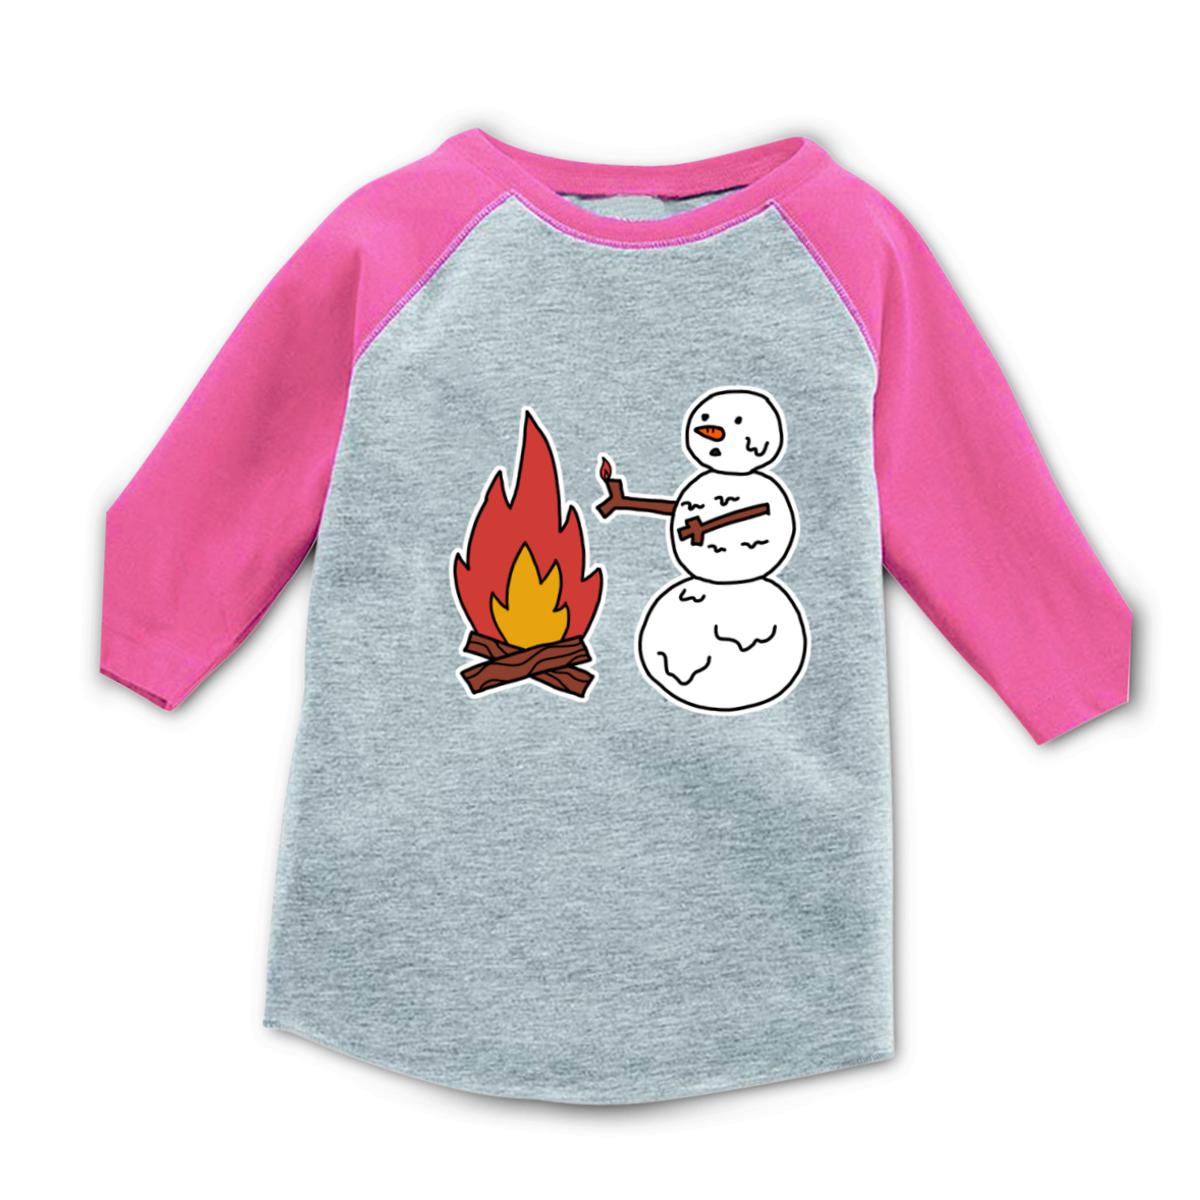 Snowman Keeping Warm Toddler Raglan Tee 2T heather-pink